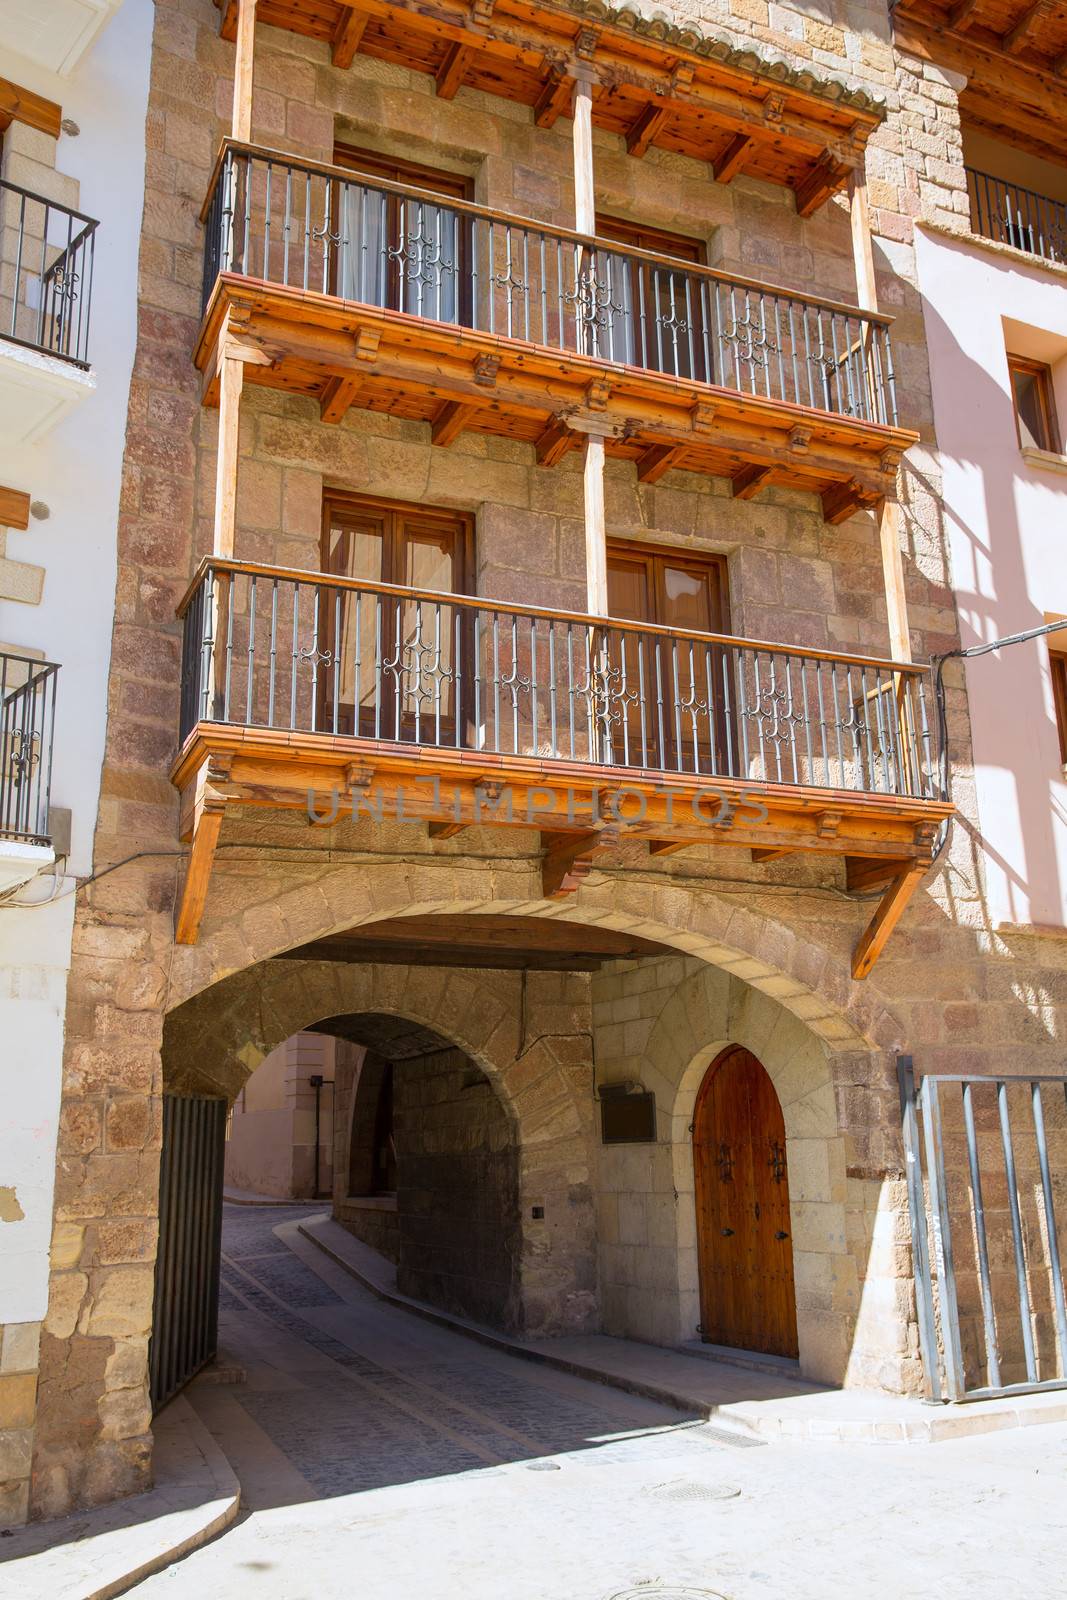 Mora de Rubielos masonry arches in Teruel Aragon stonewall village Maestrazgo Spain